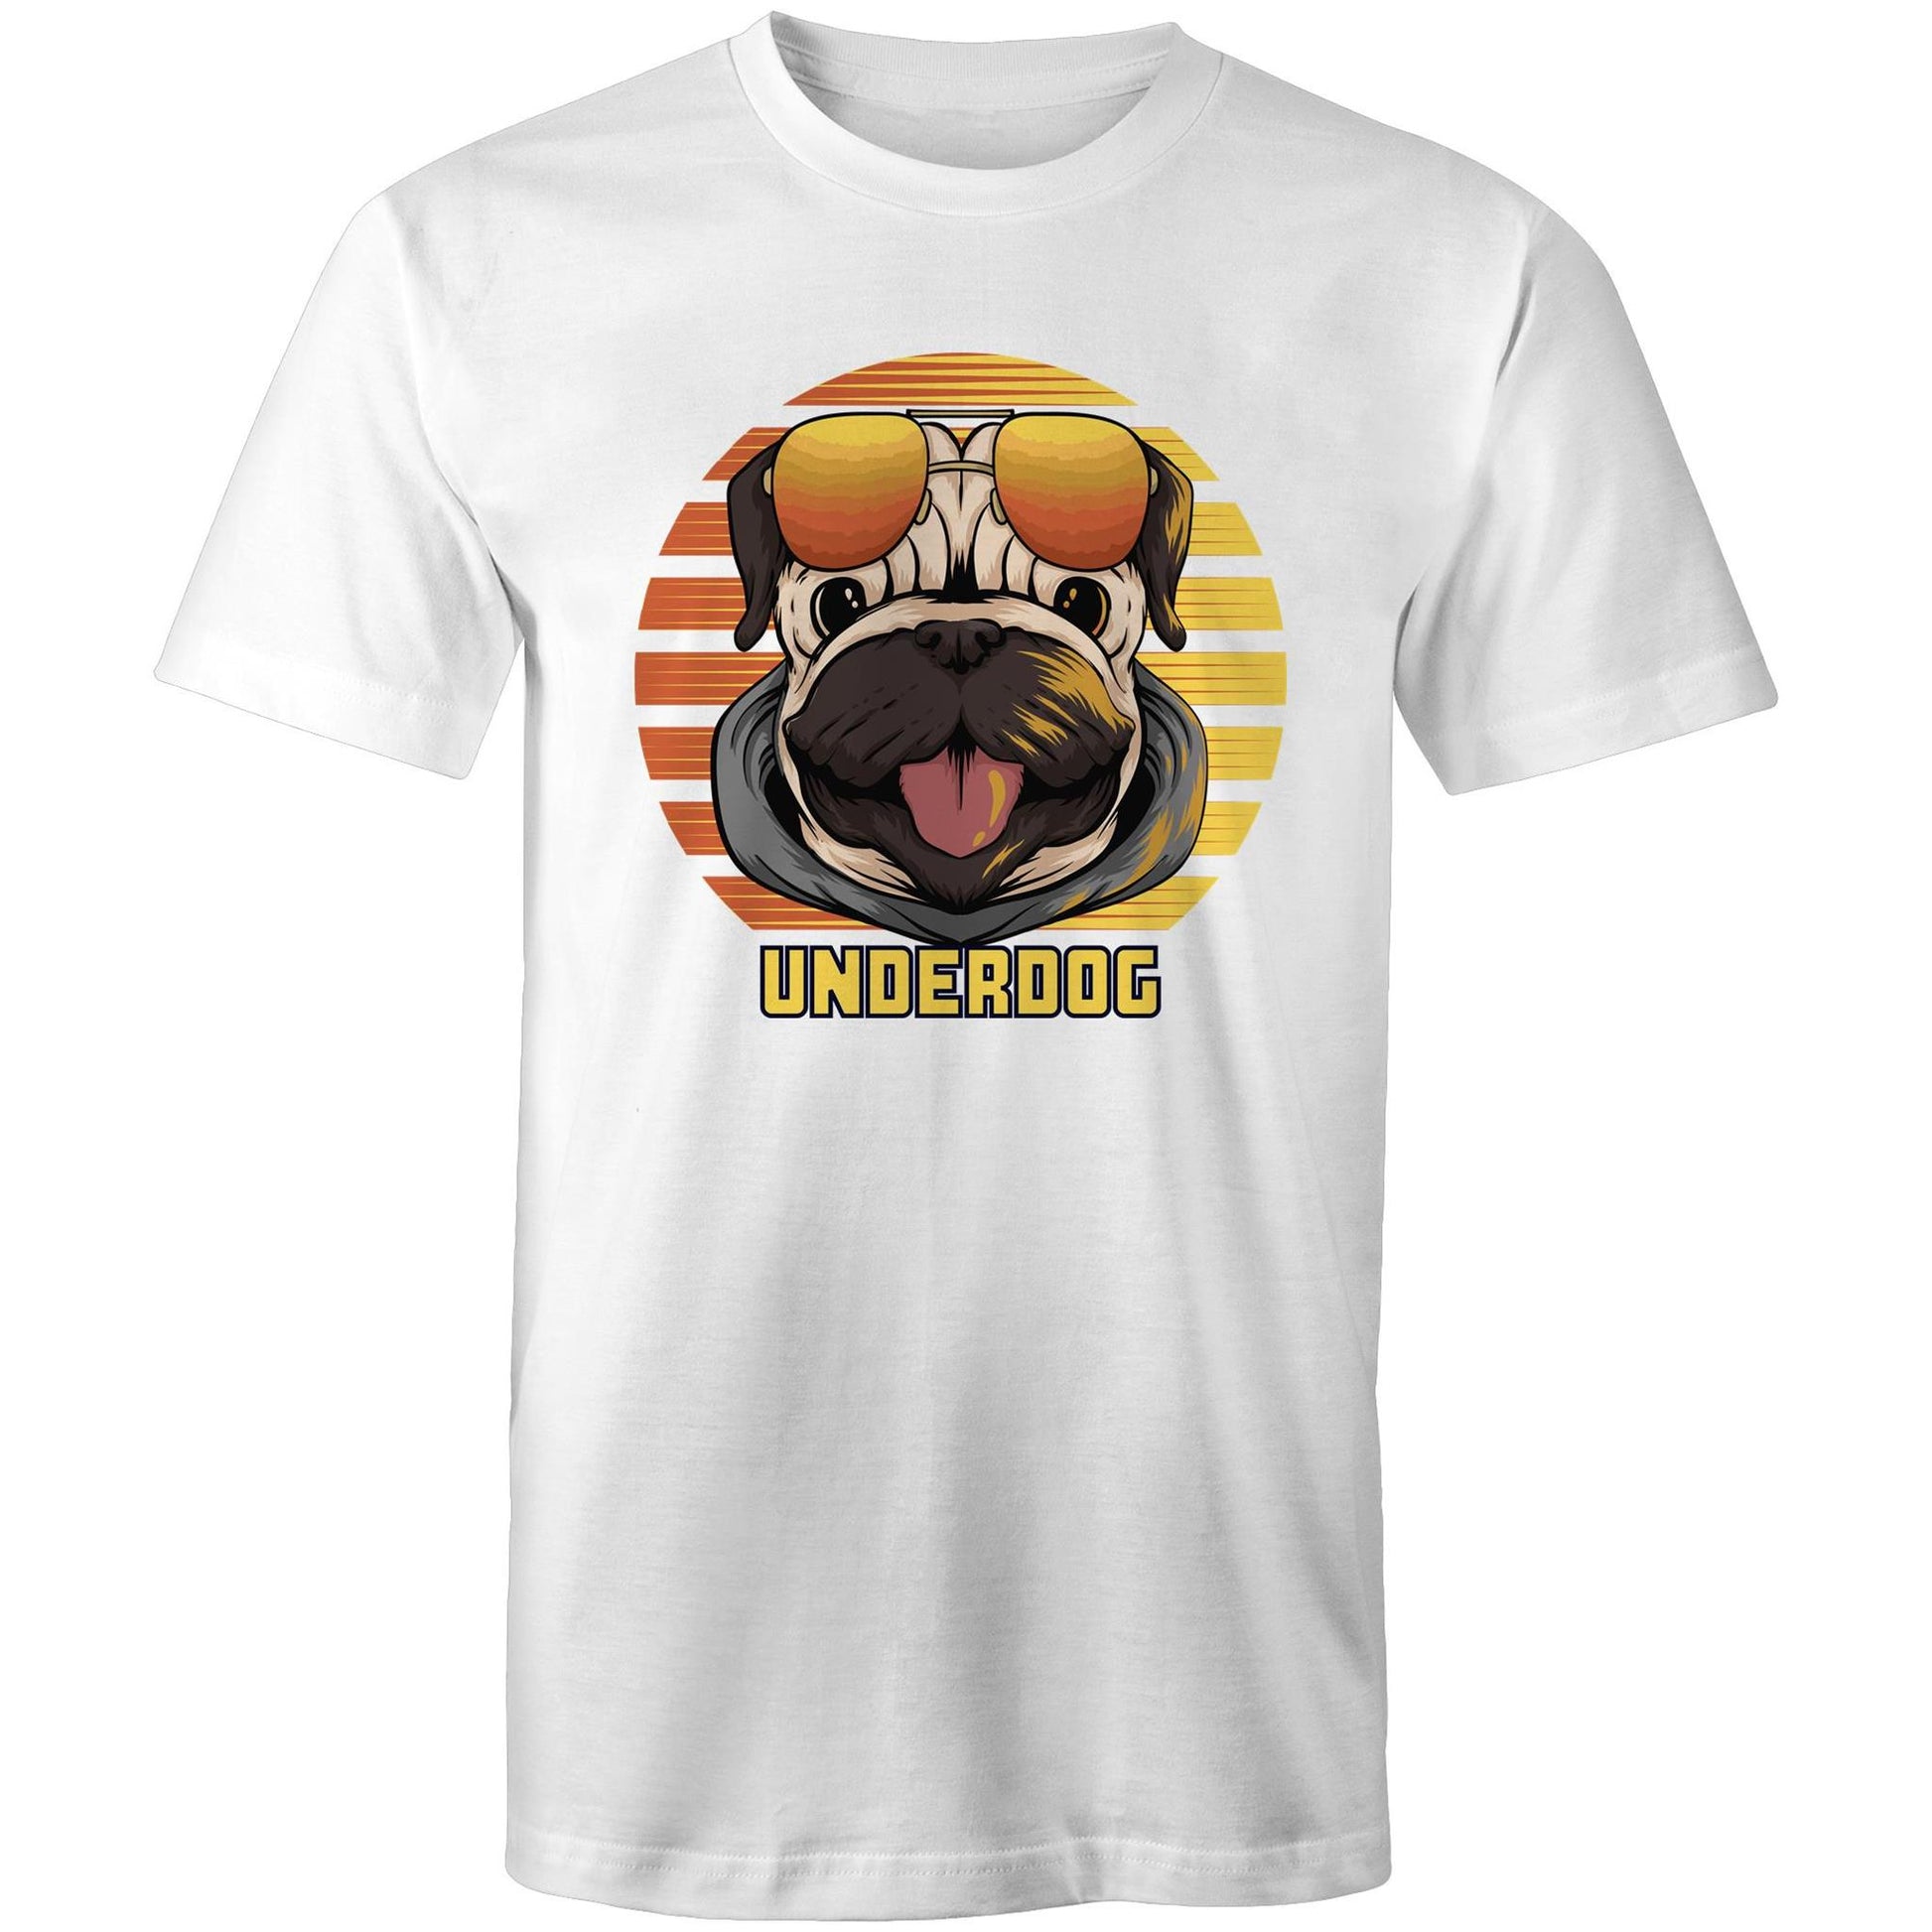 Underdog - Mens T-Shirt White Mens T-shirt animal